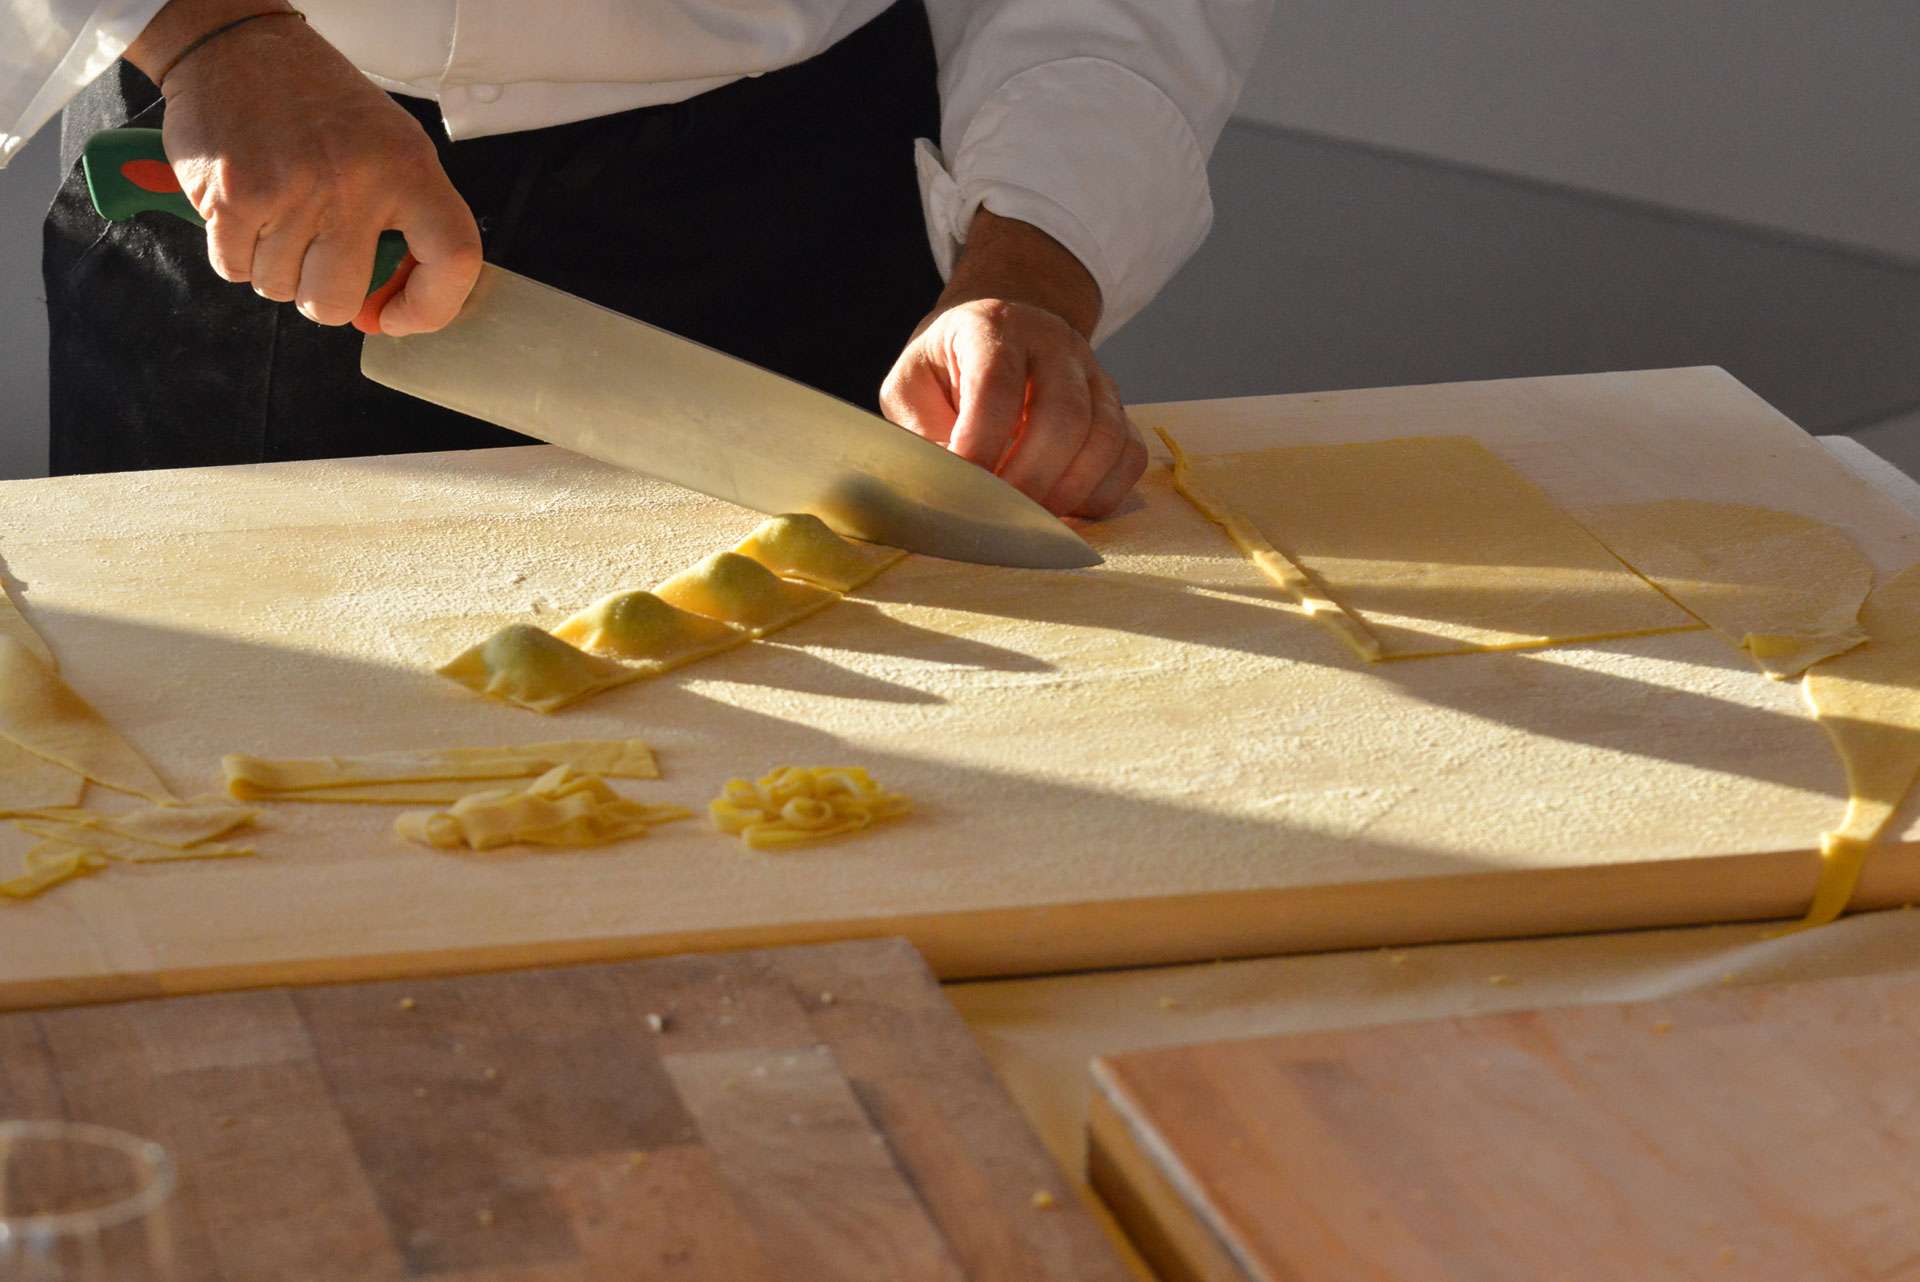 The Art of Pasta Making